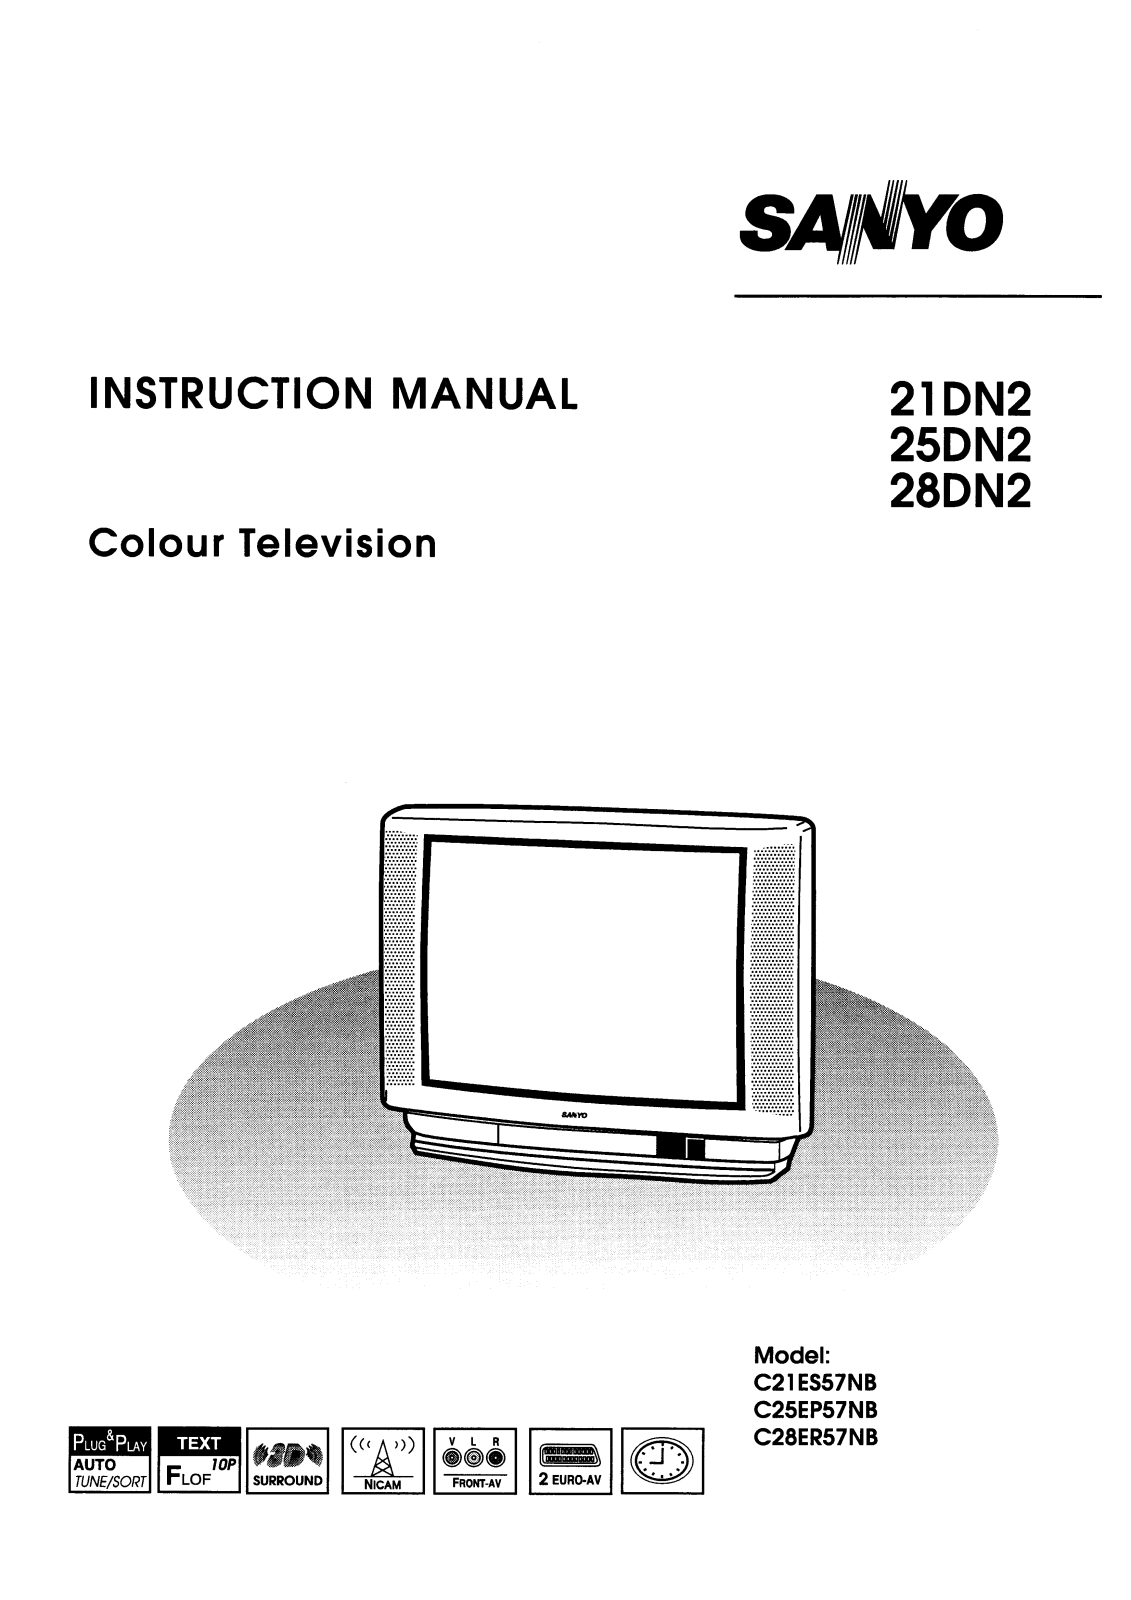 Sanyo 25DN2, 28DN2 Instruction Manual